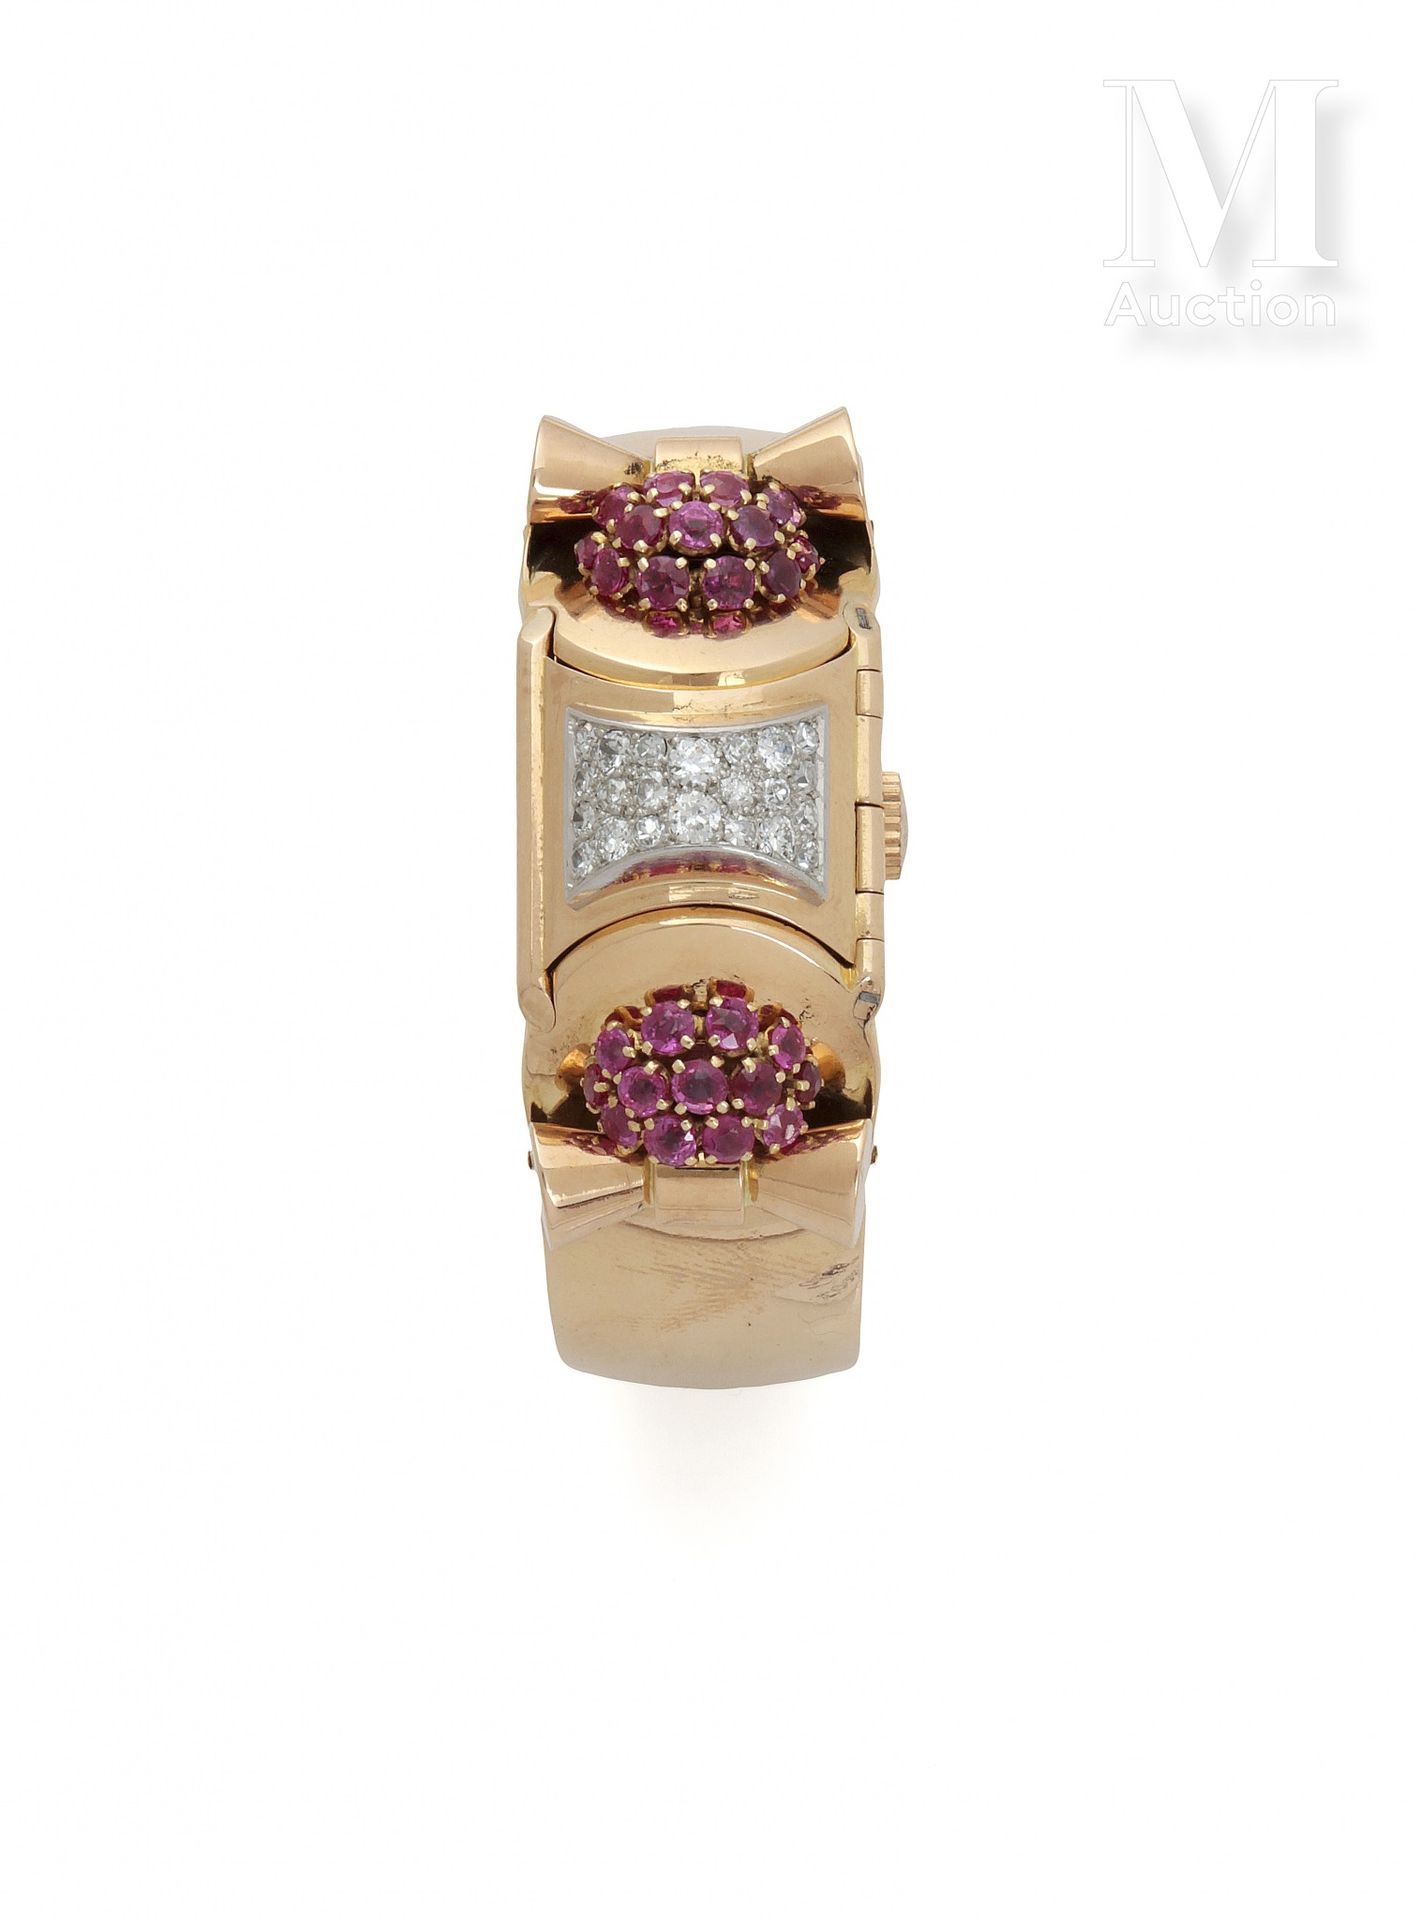 LANCO Women's wristwatches

Circa 1950

18K gold case set with diamonds and rubi&hellip;